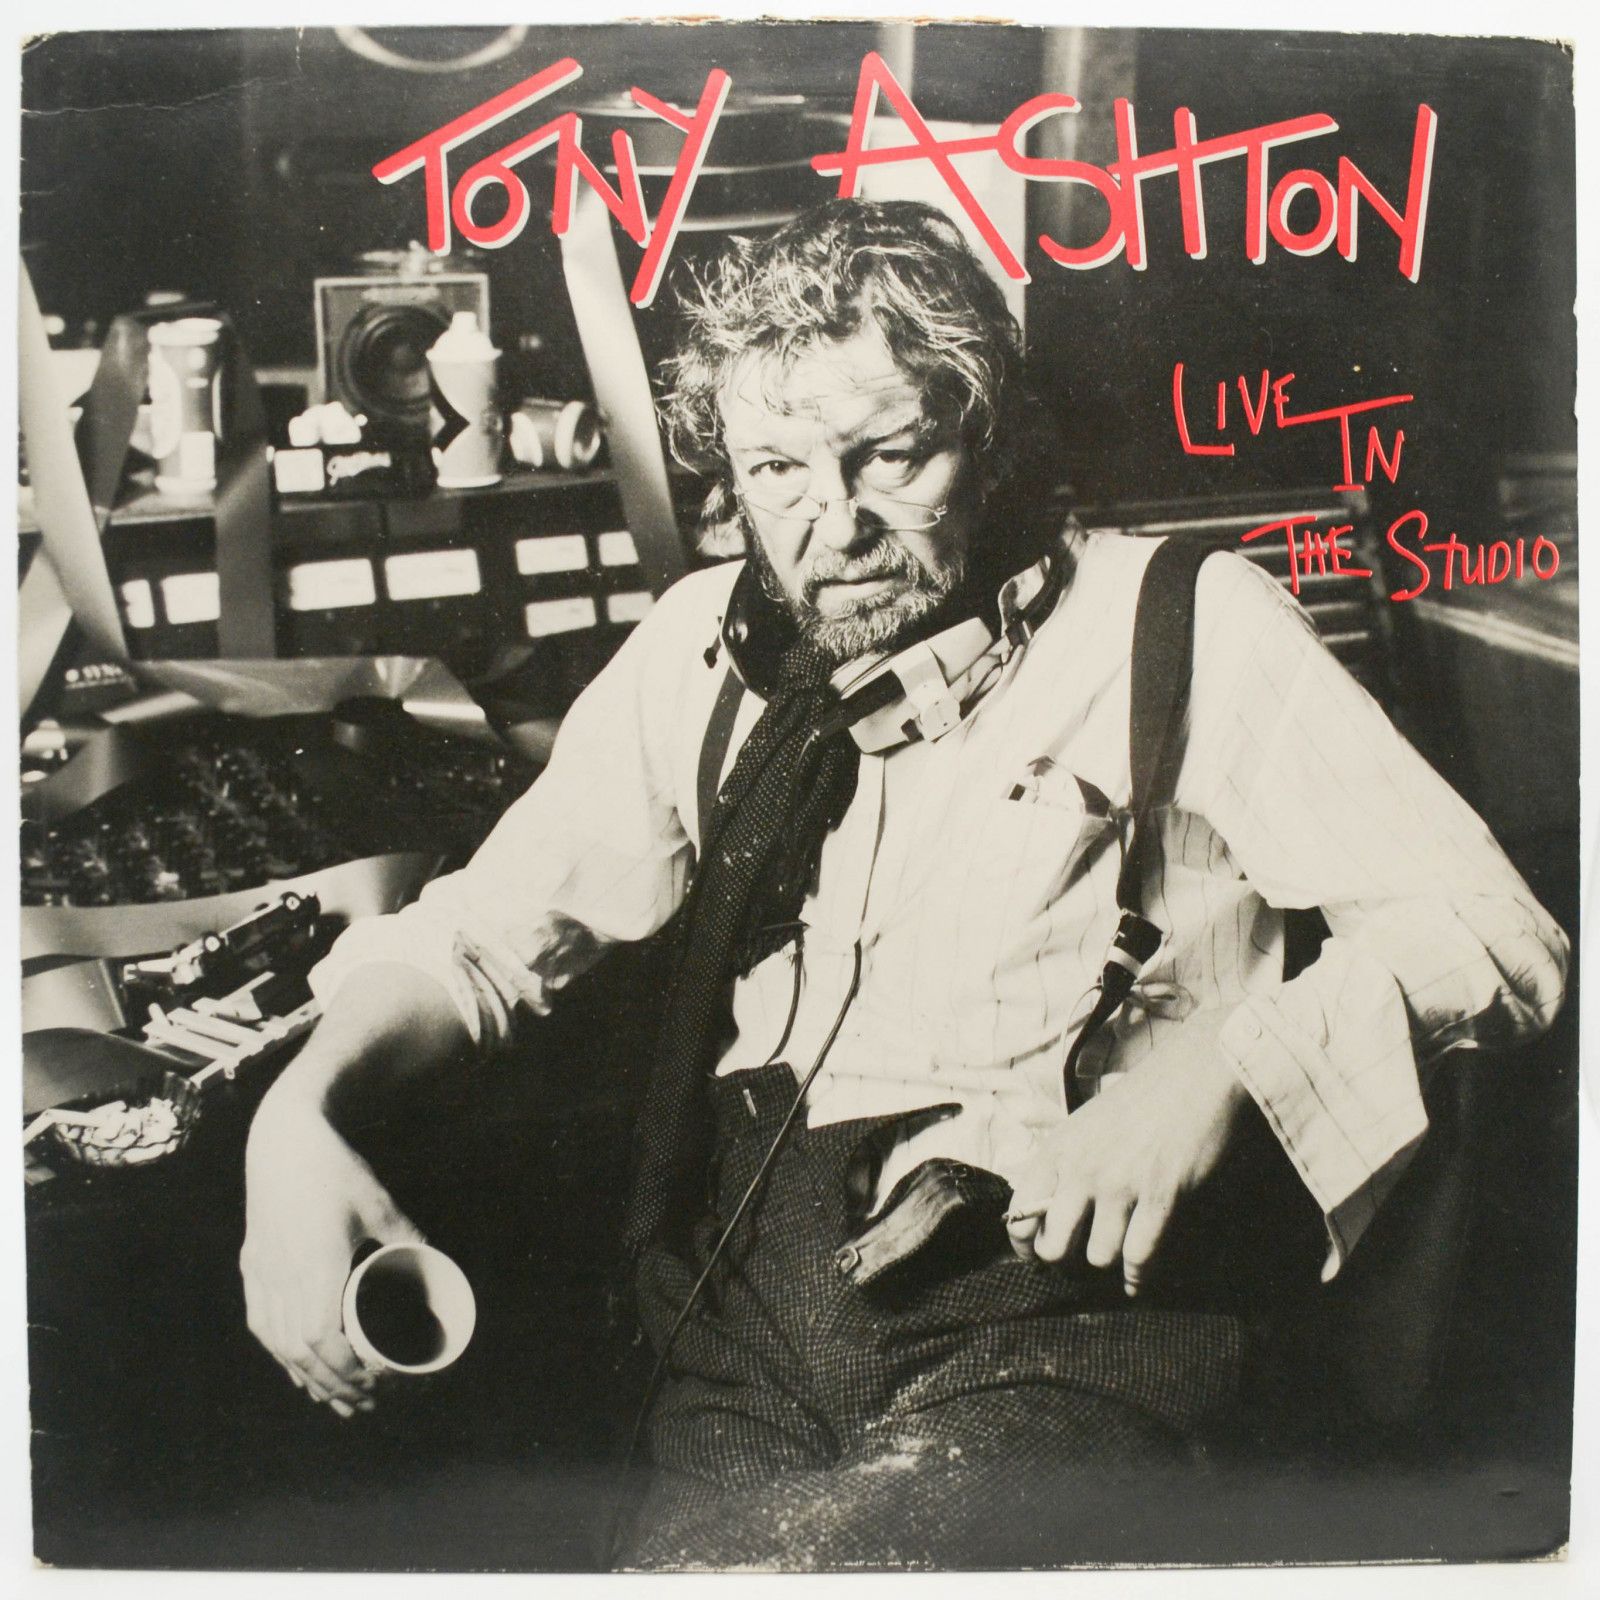 Tony Ashton — Live In The Studio, 1984